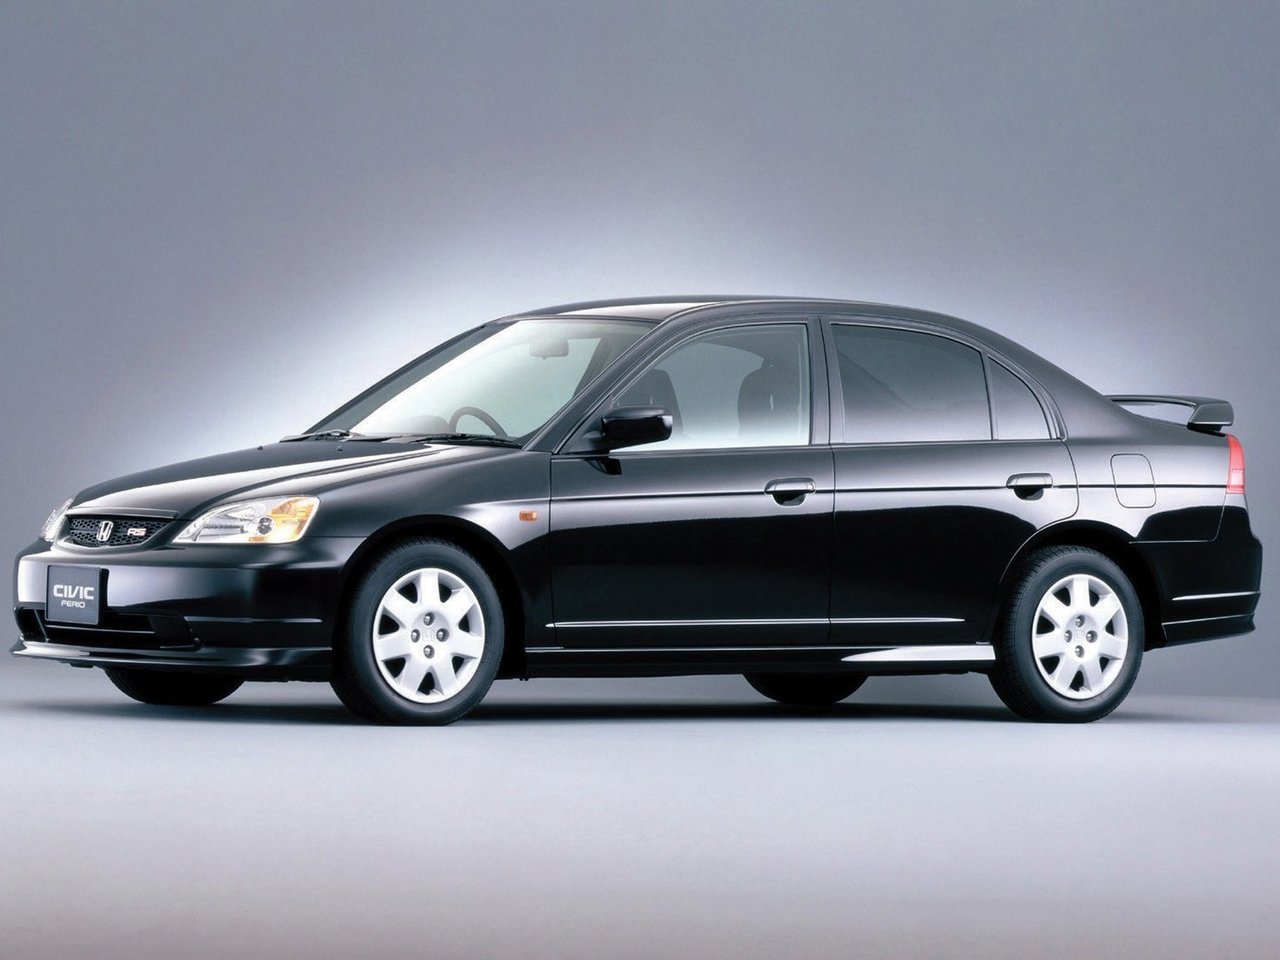 Хонда 2005 года по моделям фото